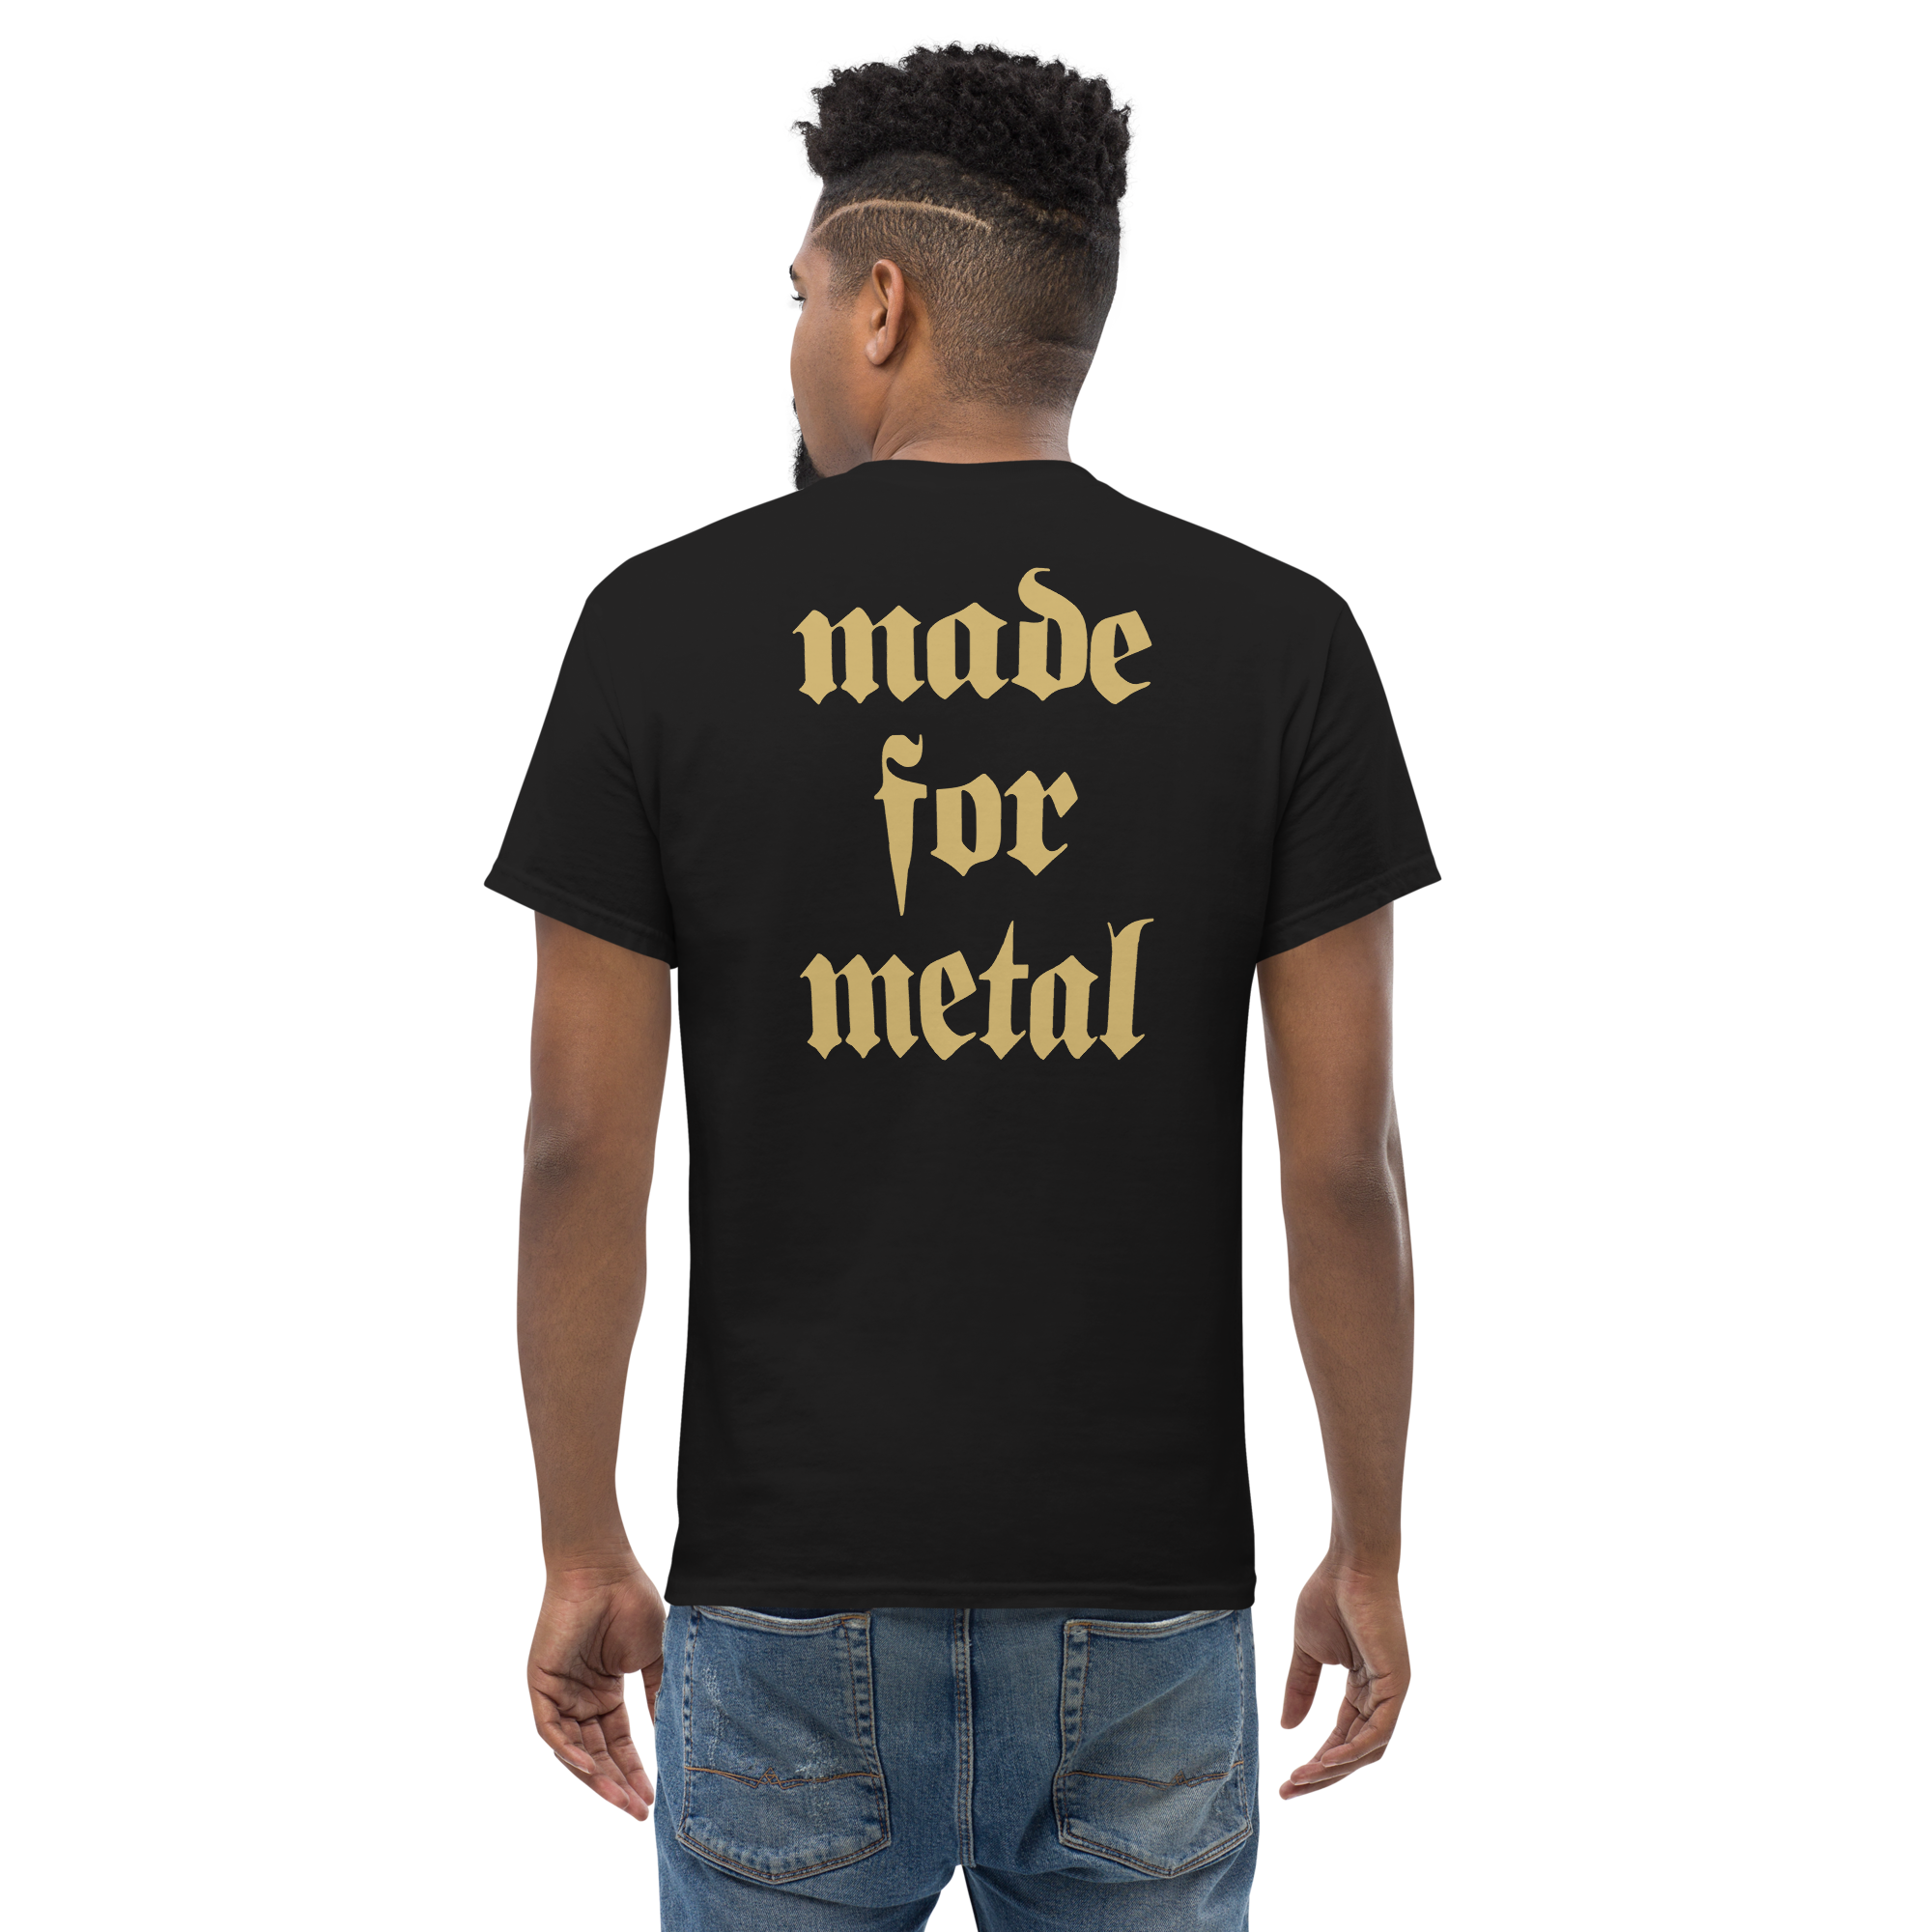 Blakhart Guitars - Made for Metal Desert Tan Short Sleeve T-shirt